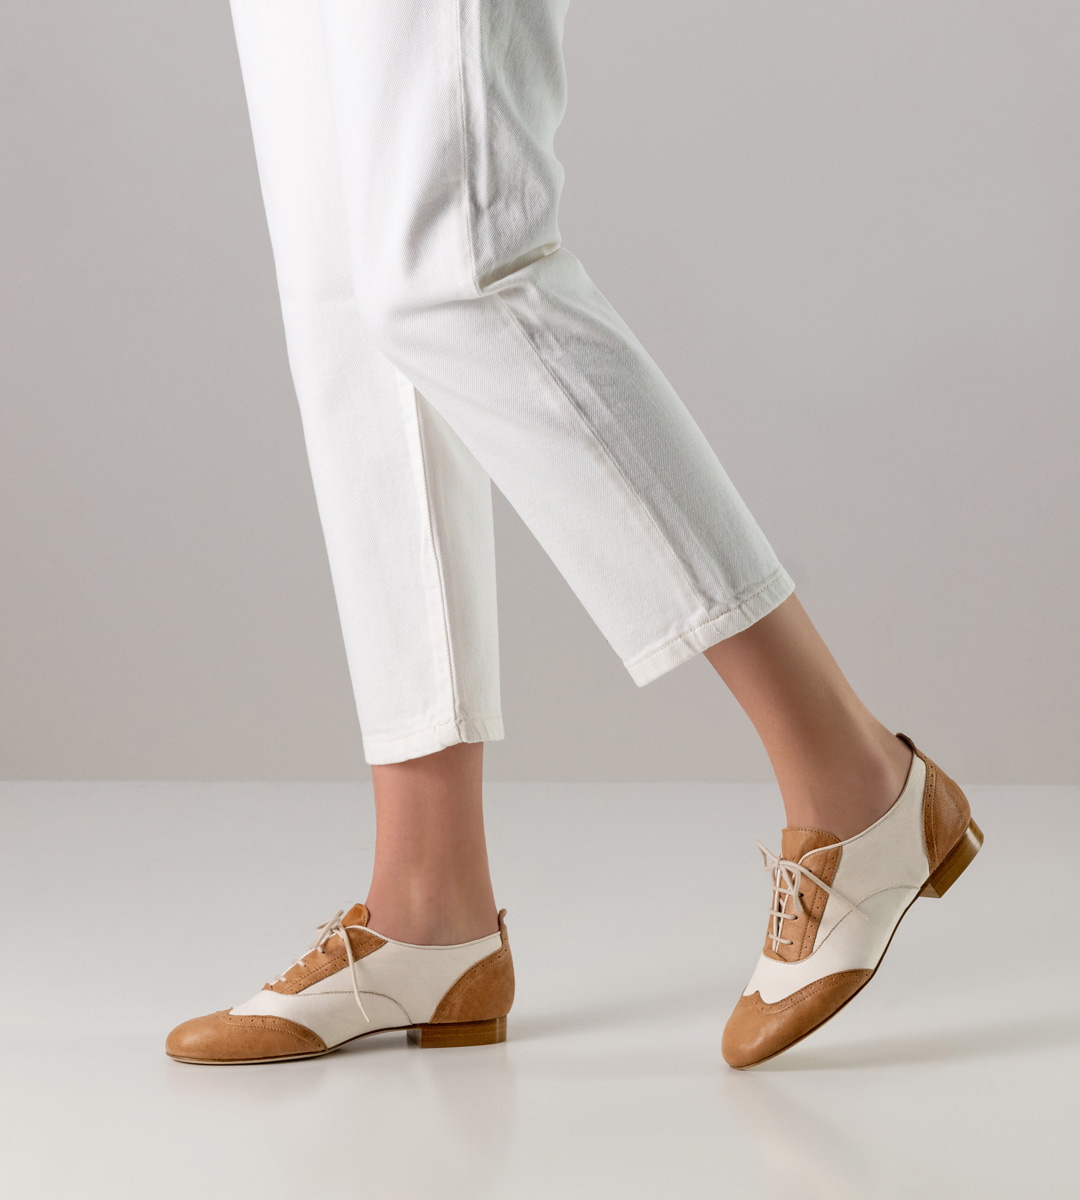 Chaussures de danse féminine Swing en beige et blanc de Werner Kern avec semelle en cuir